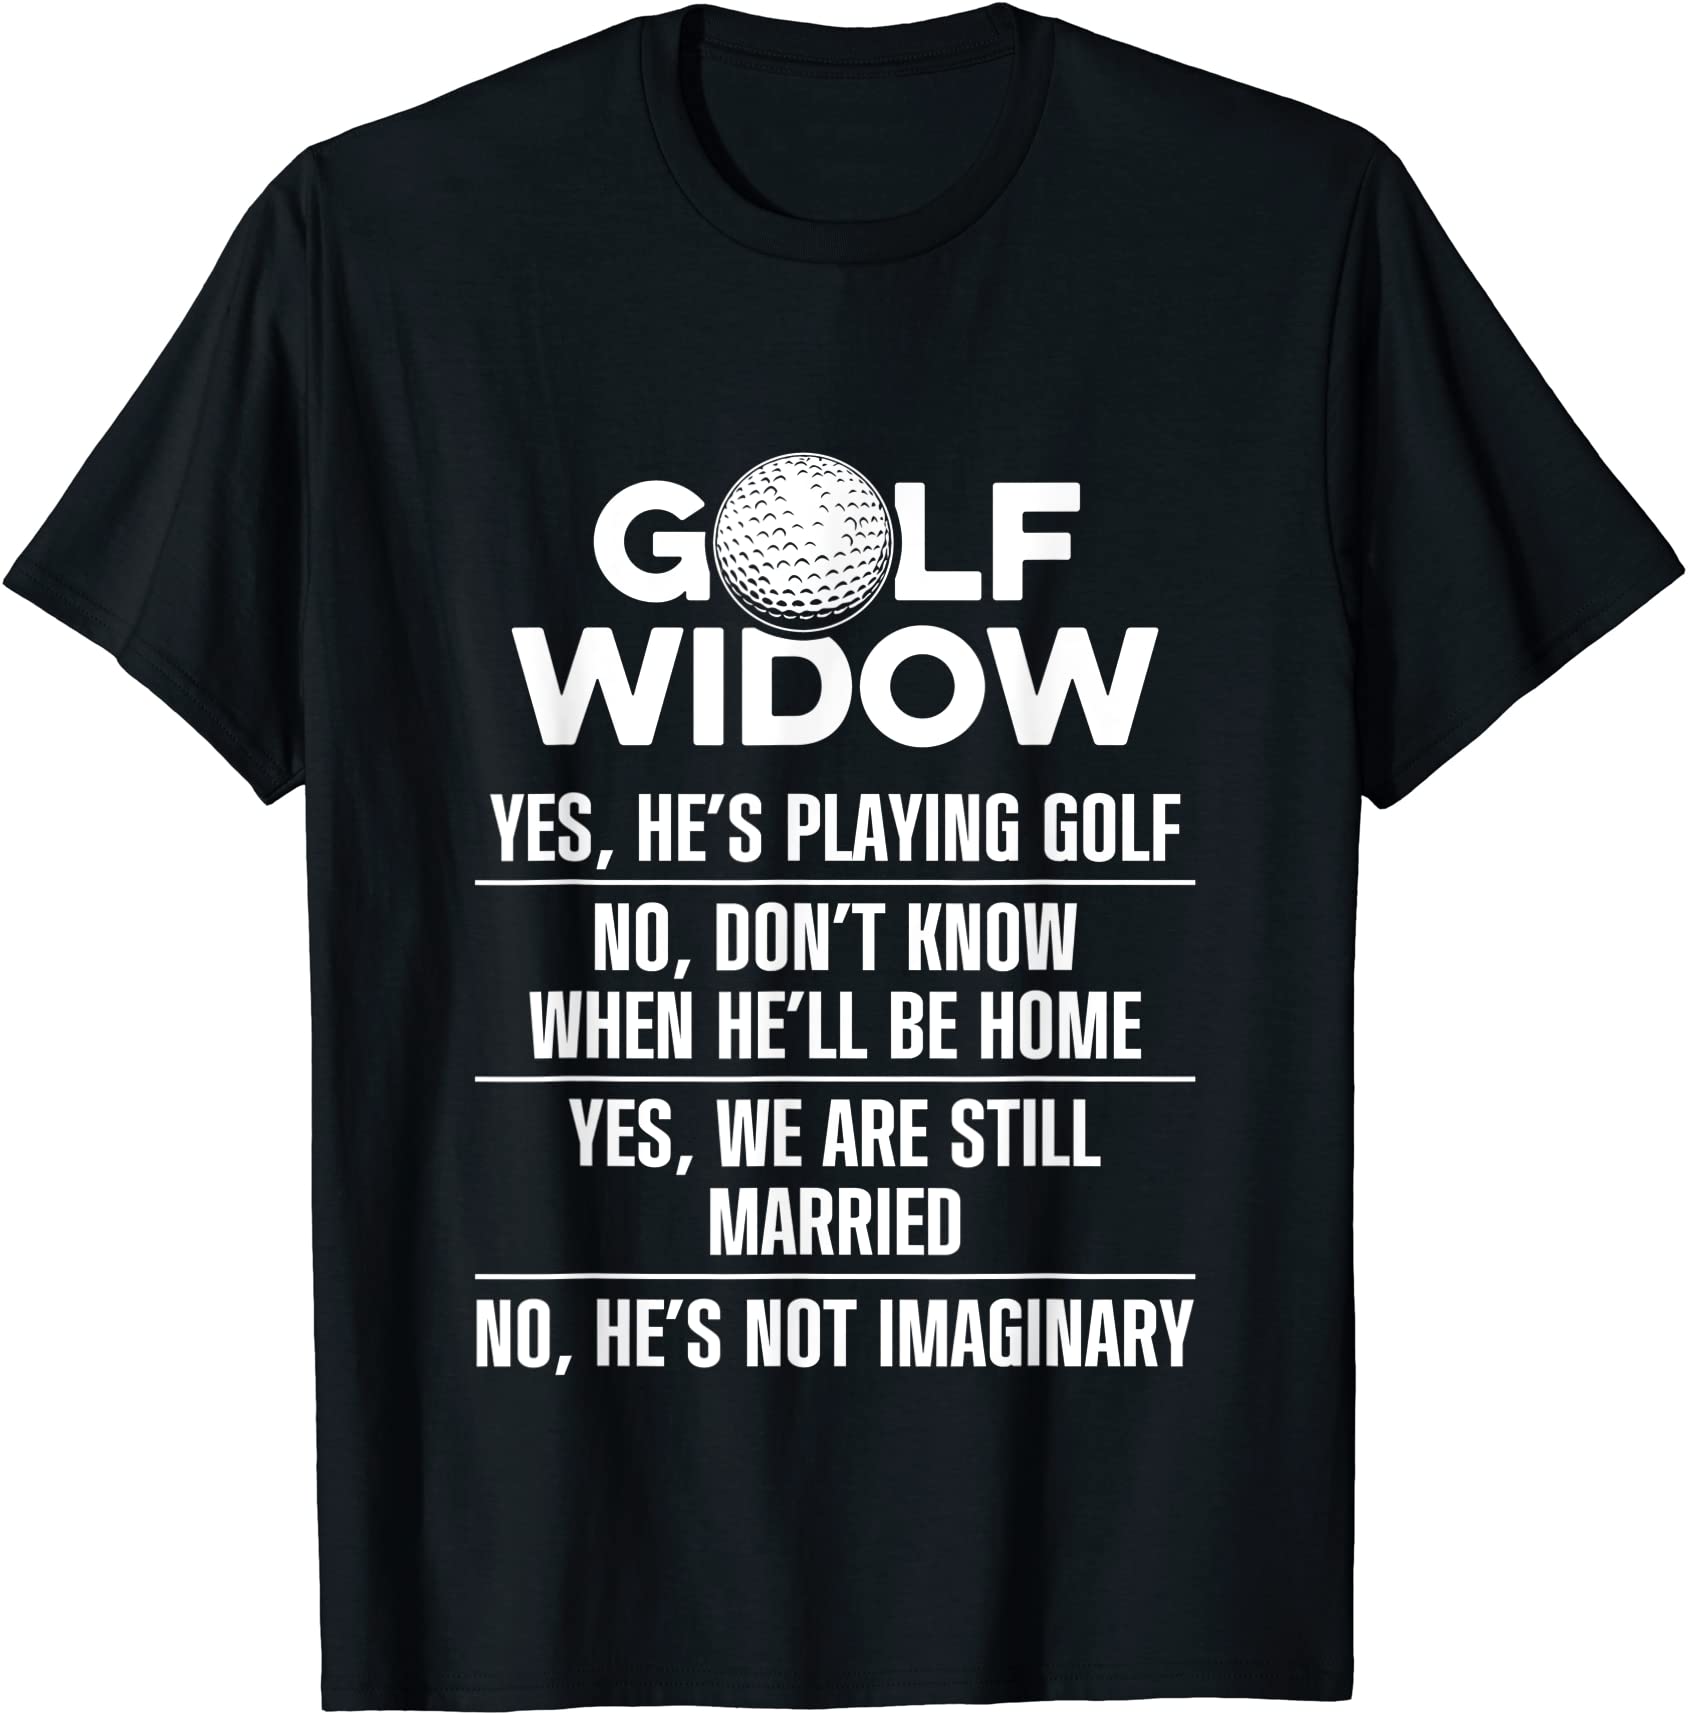 golf widow wife still married golfer funny golfing t shirt men - Buy t ...